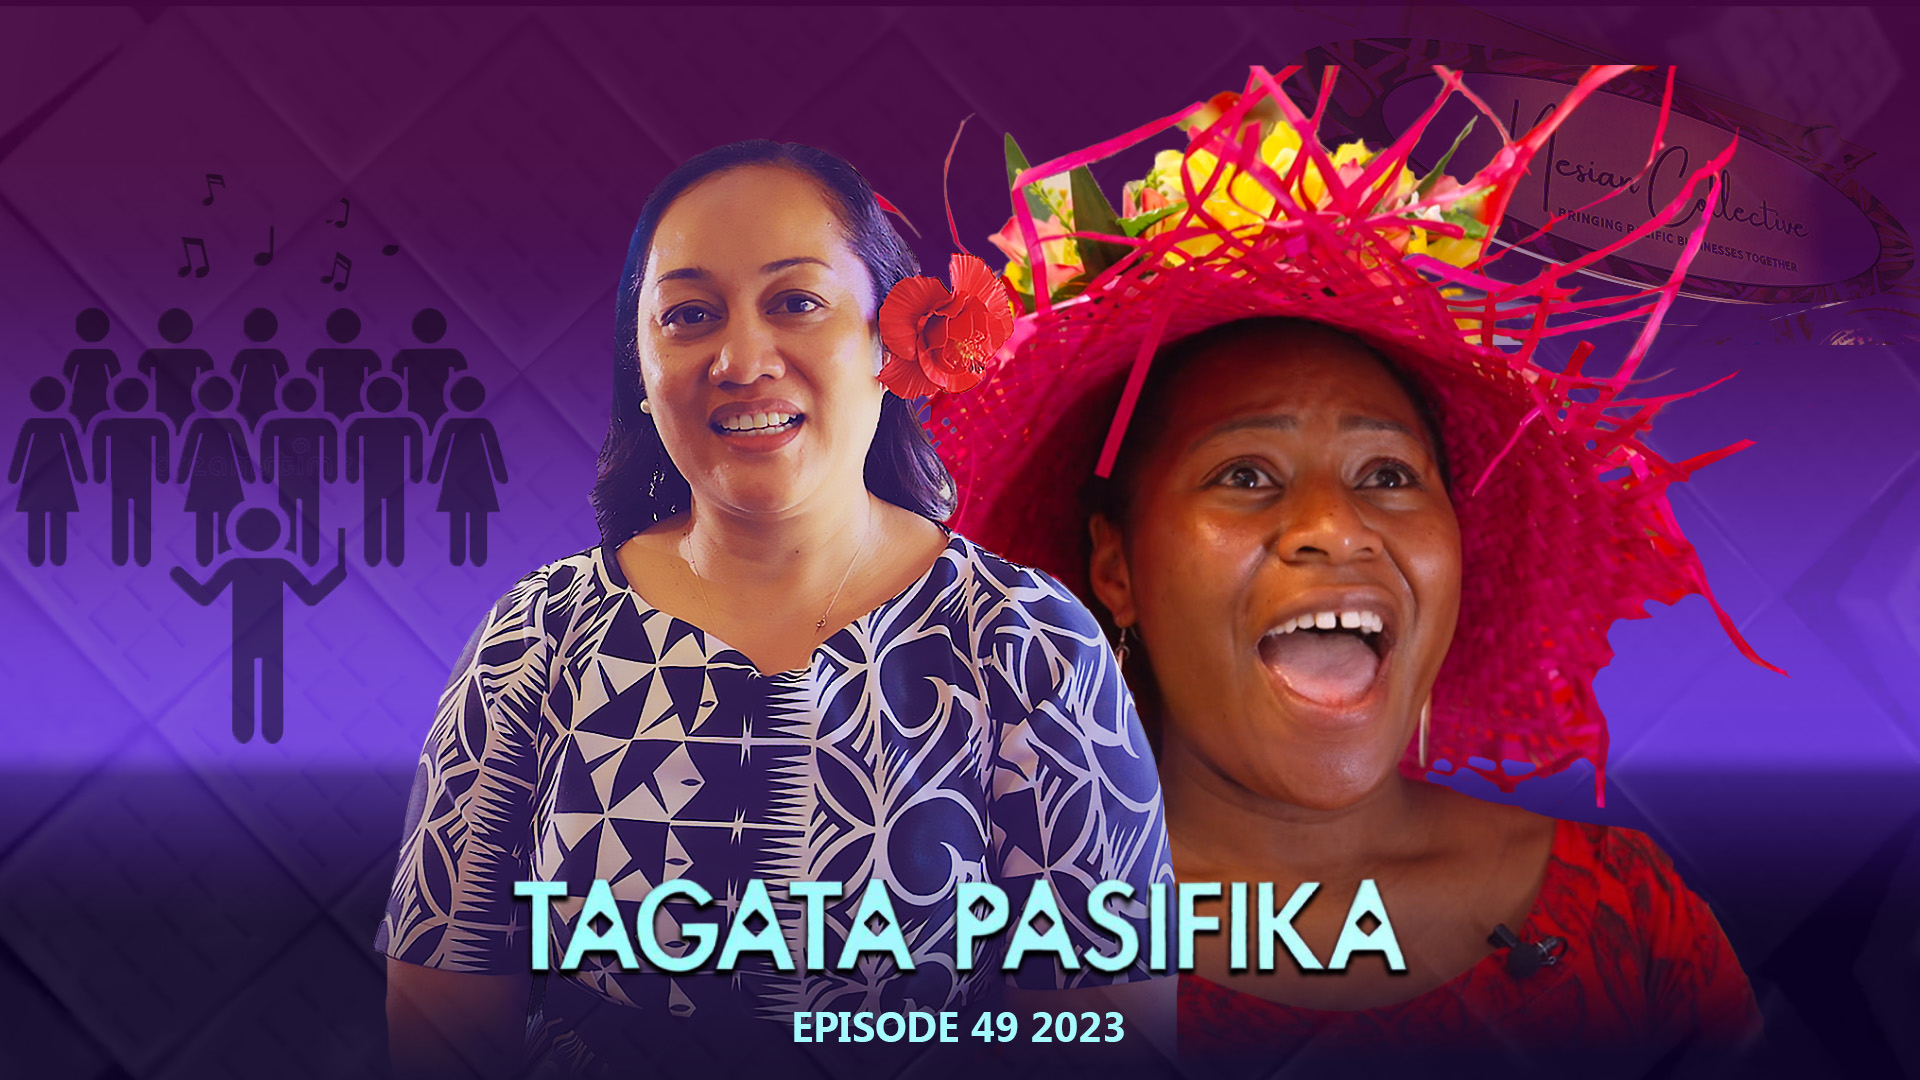 WATCH: Tagata Pasifika 2023 Episode 49